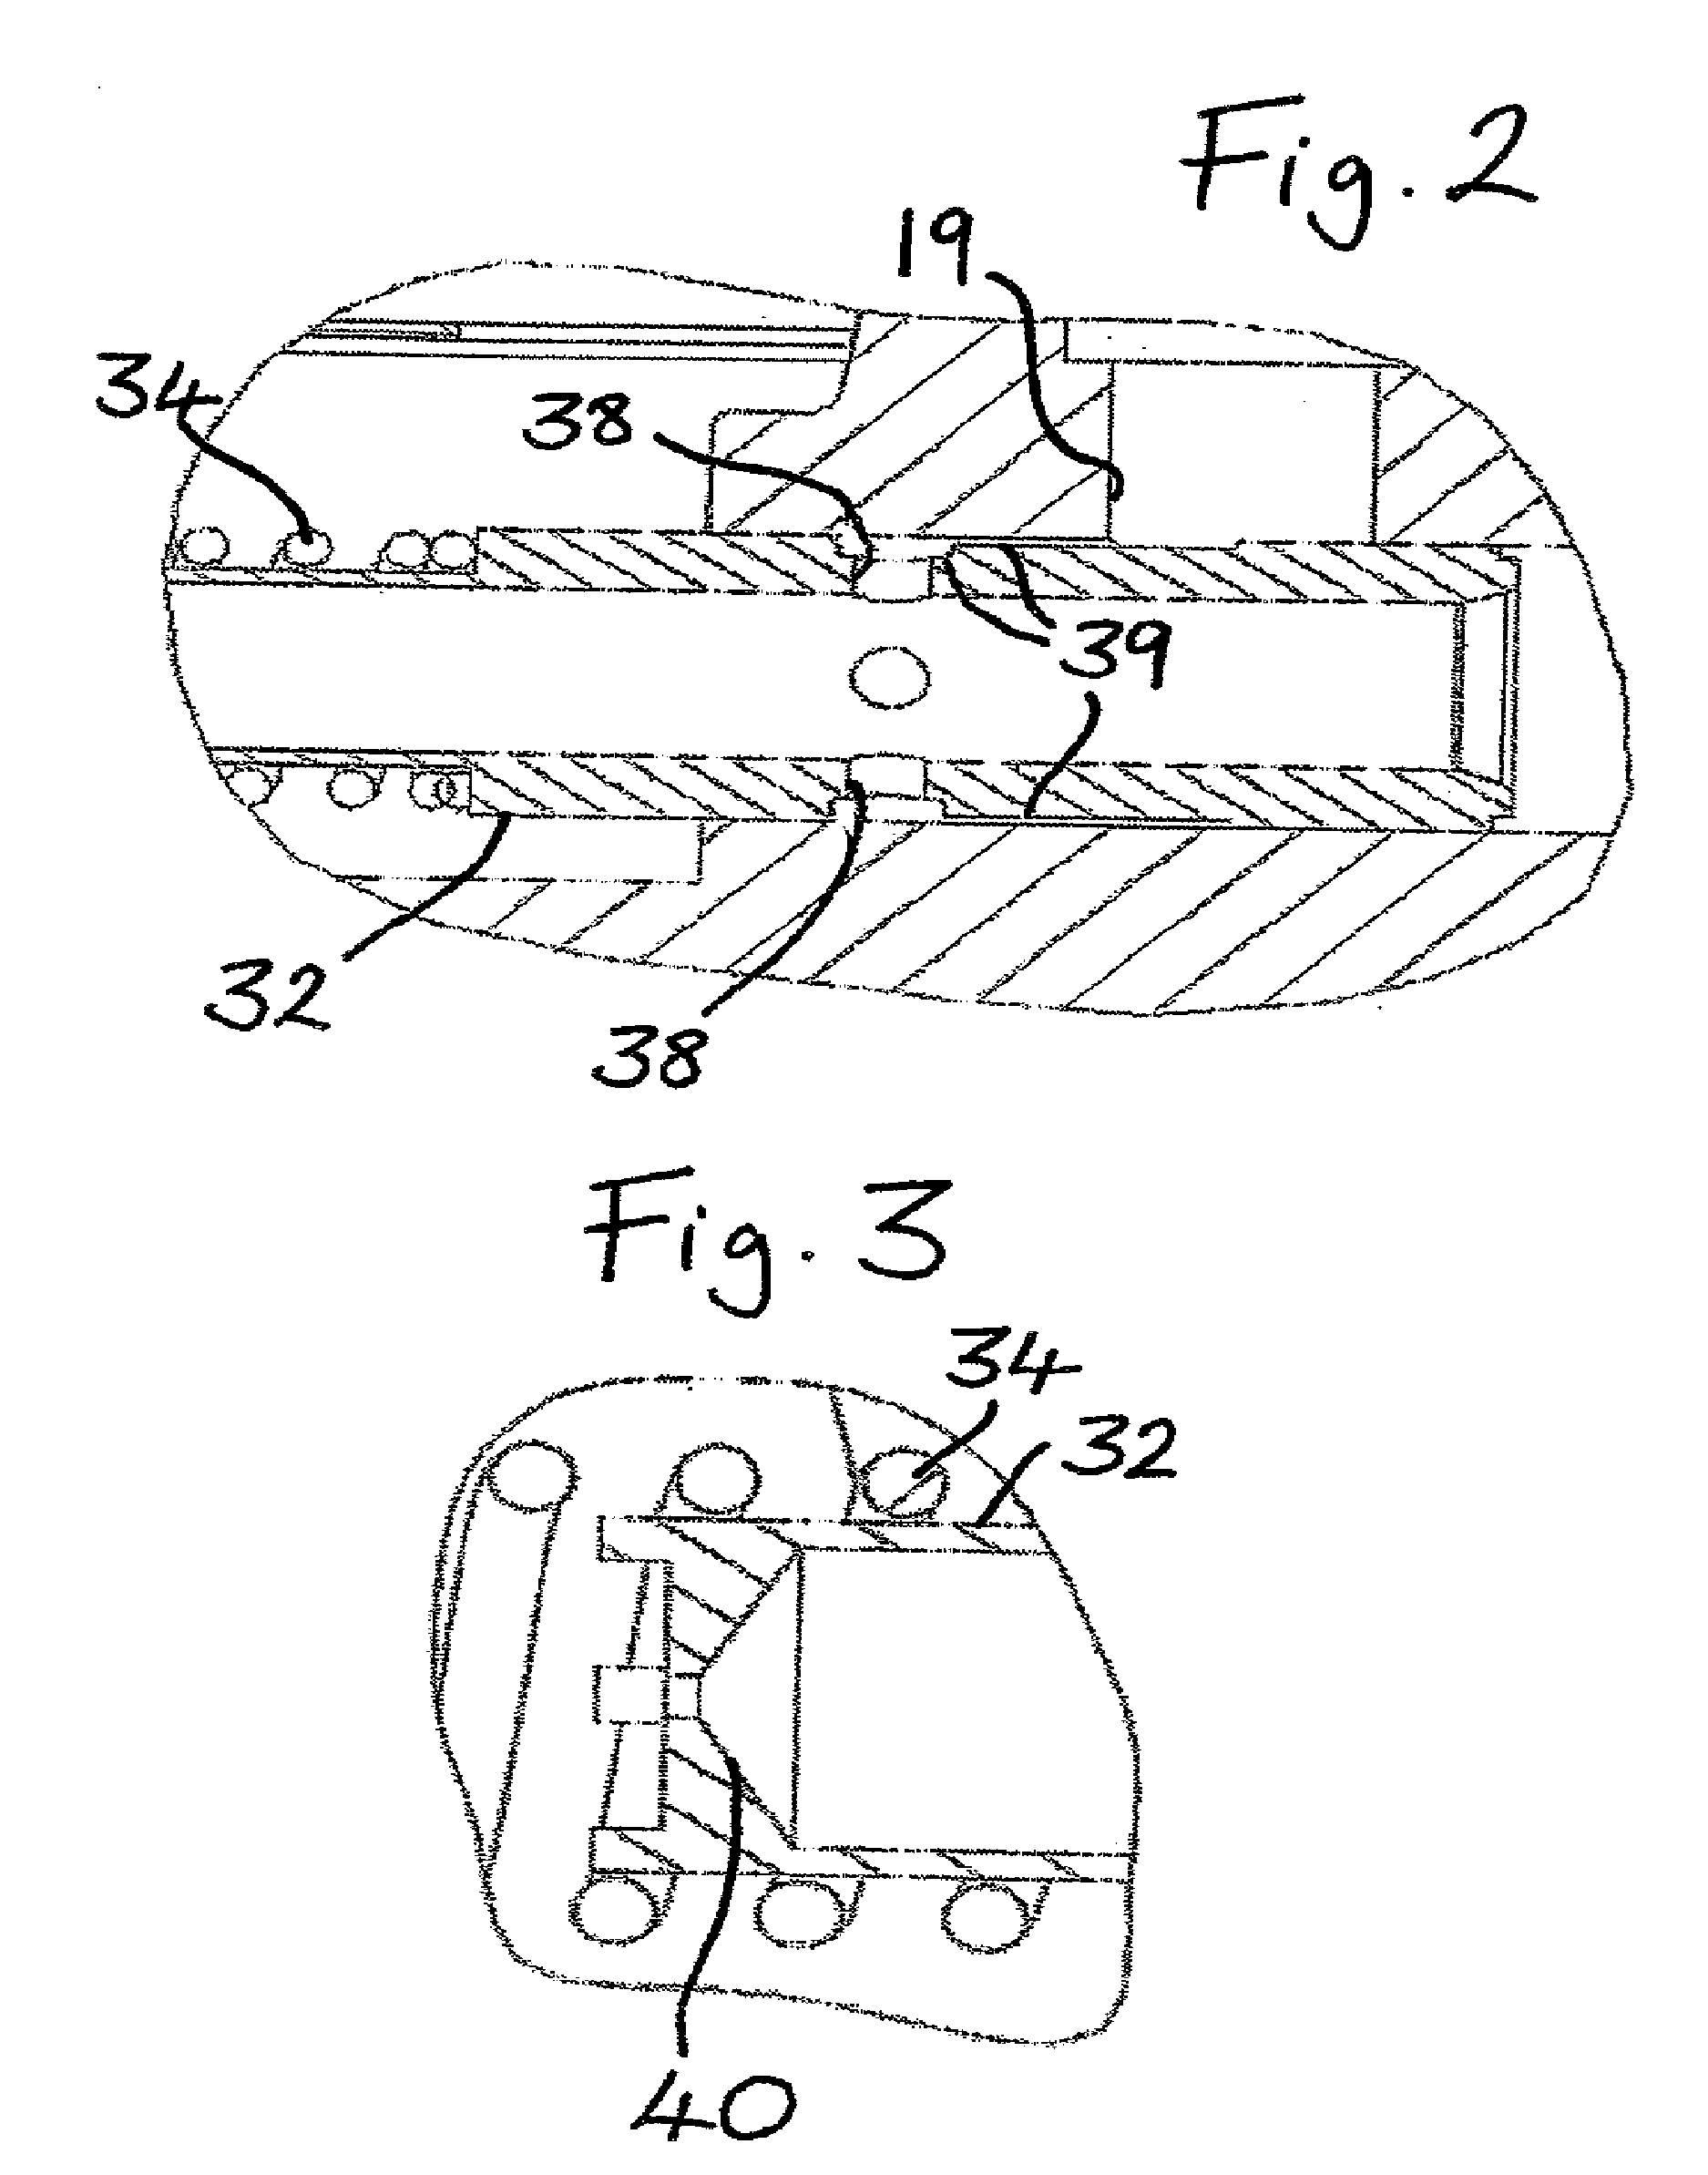 Centrifugal separator with venturi arrangement